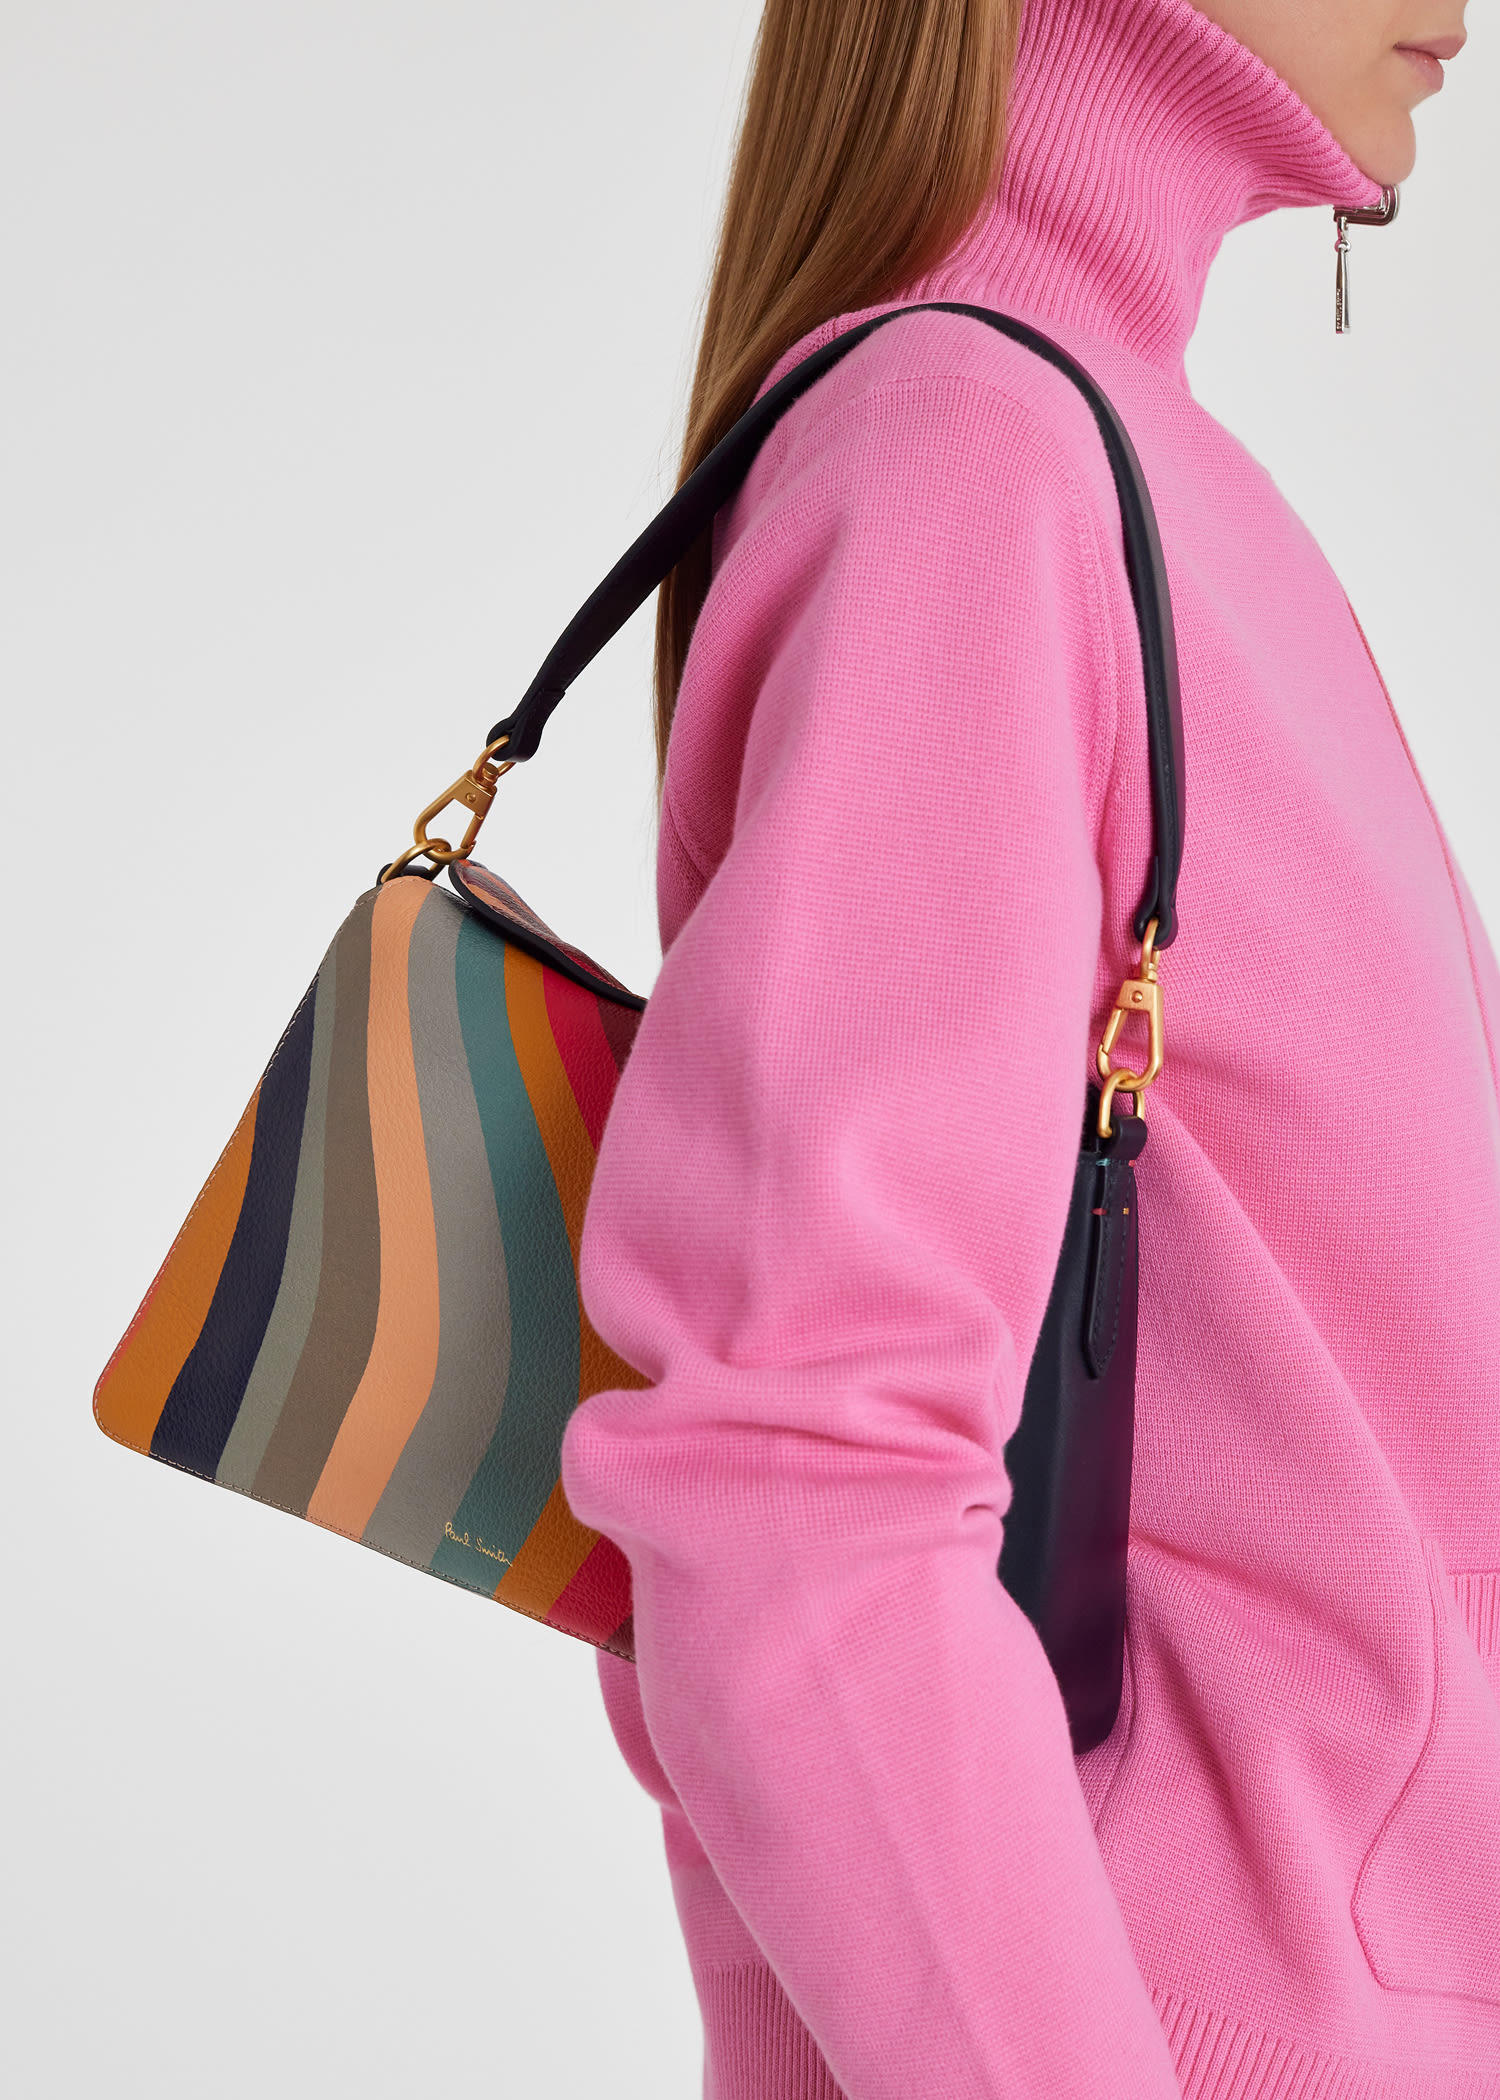 Women's Leather 'Swirl' Shoulder Bag